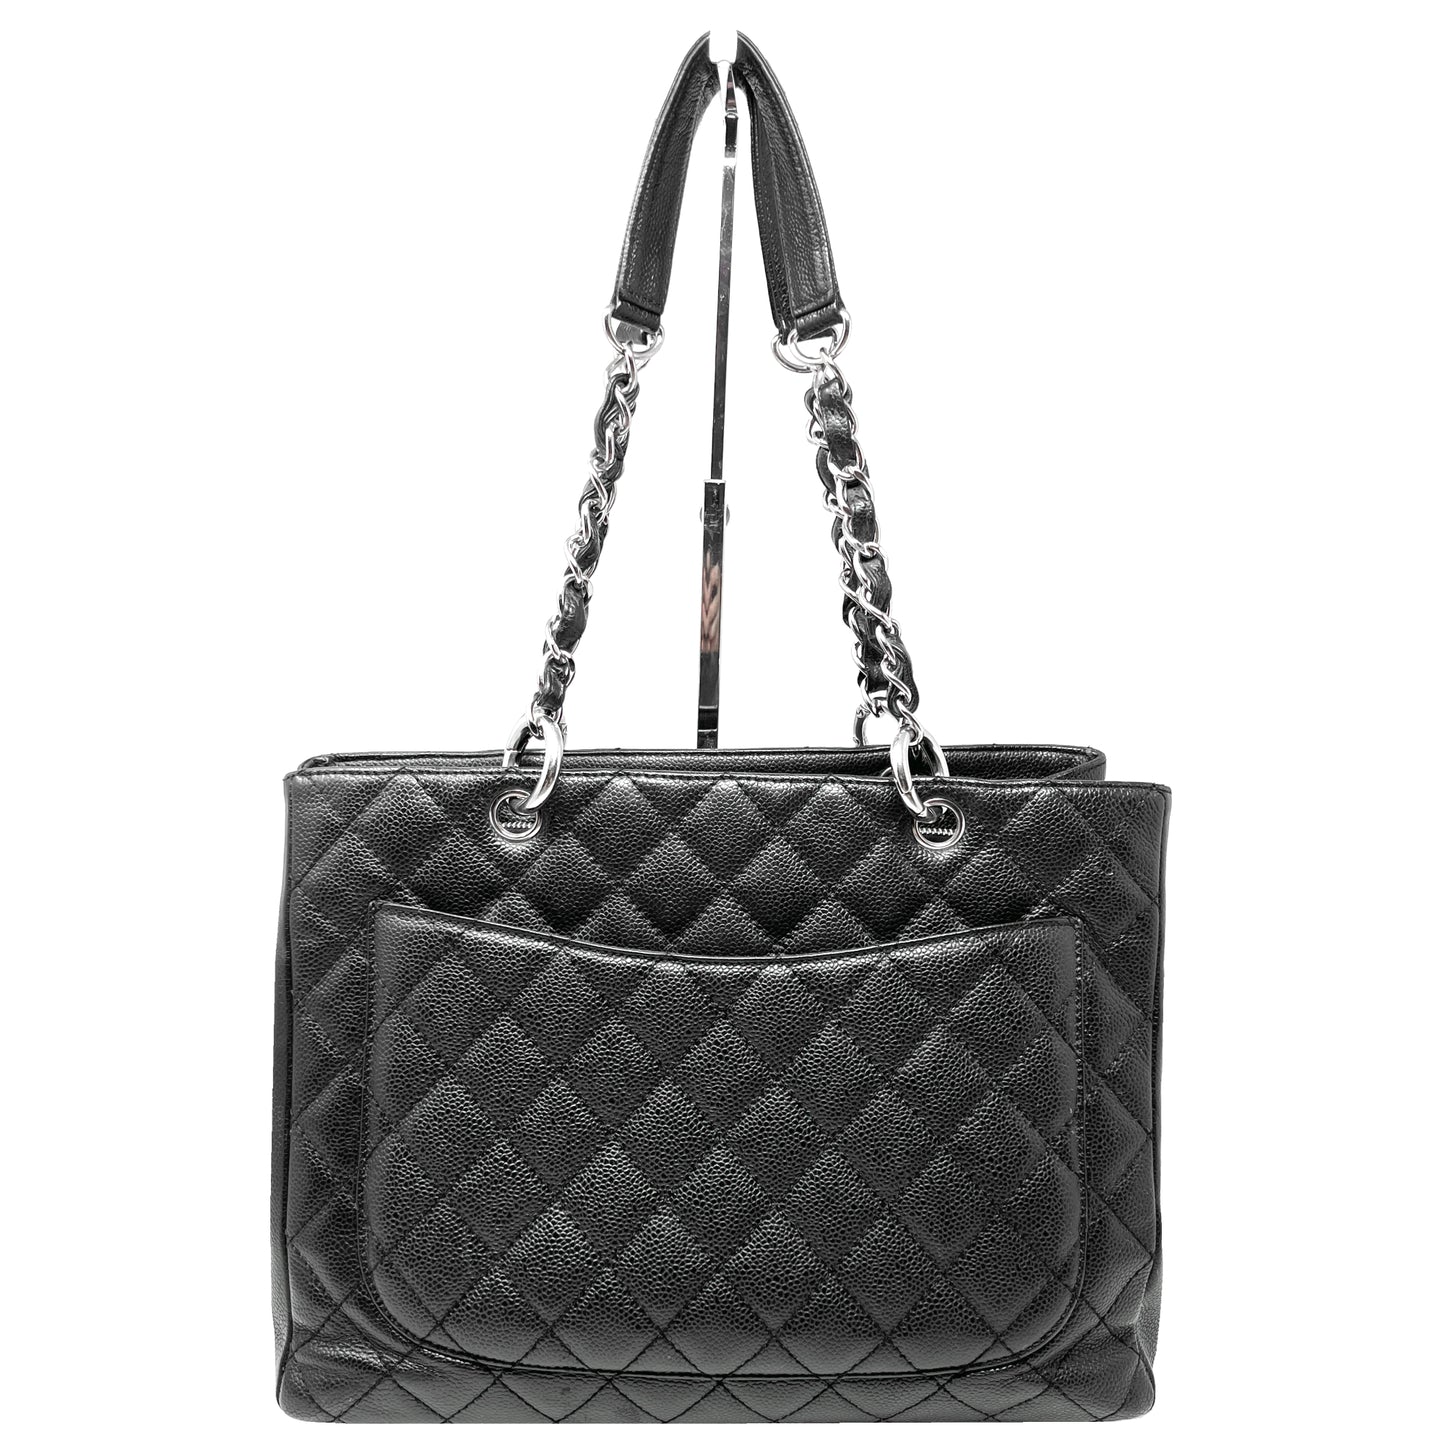 Chanel Black Quilted Caviar Leather CC Logo Grand Shopper Tote Shoulder Bag